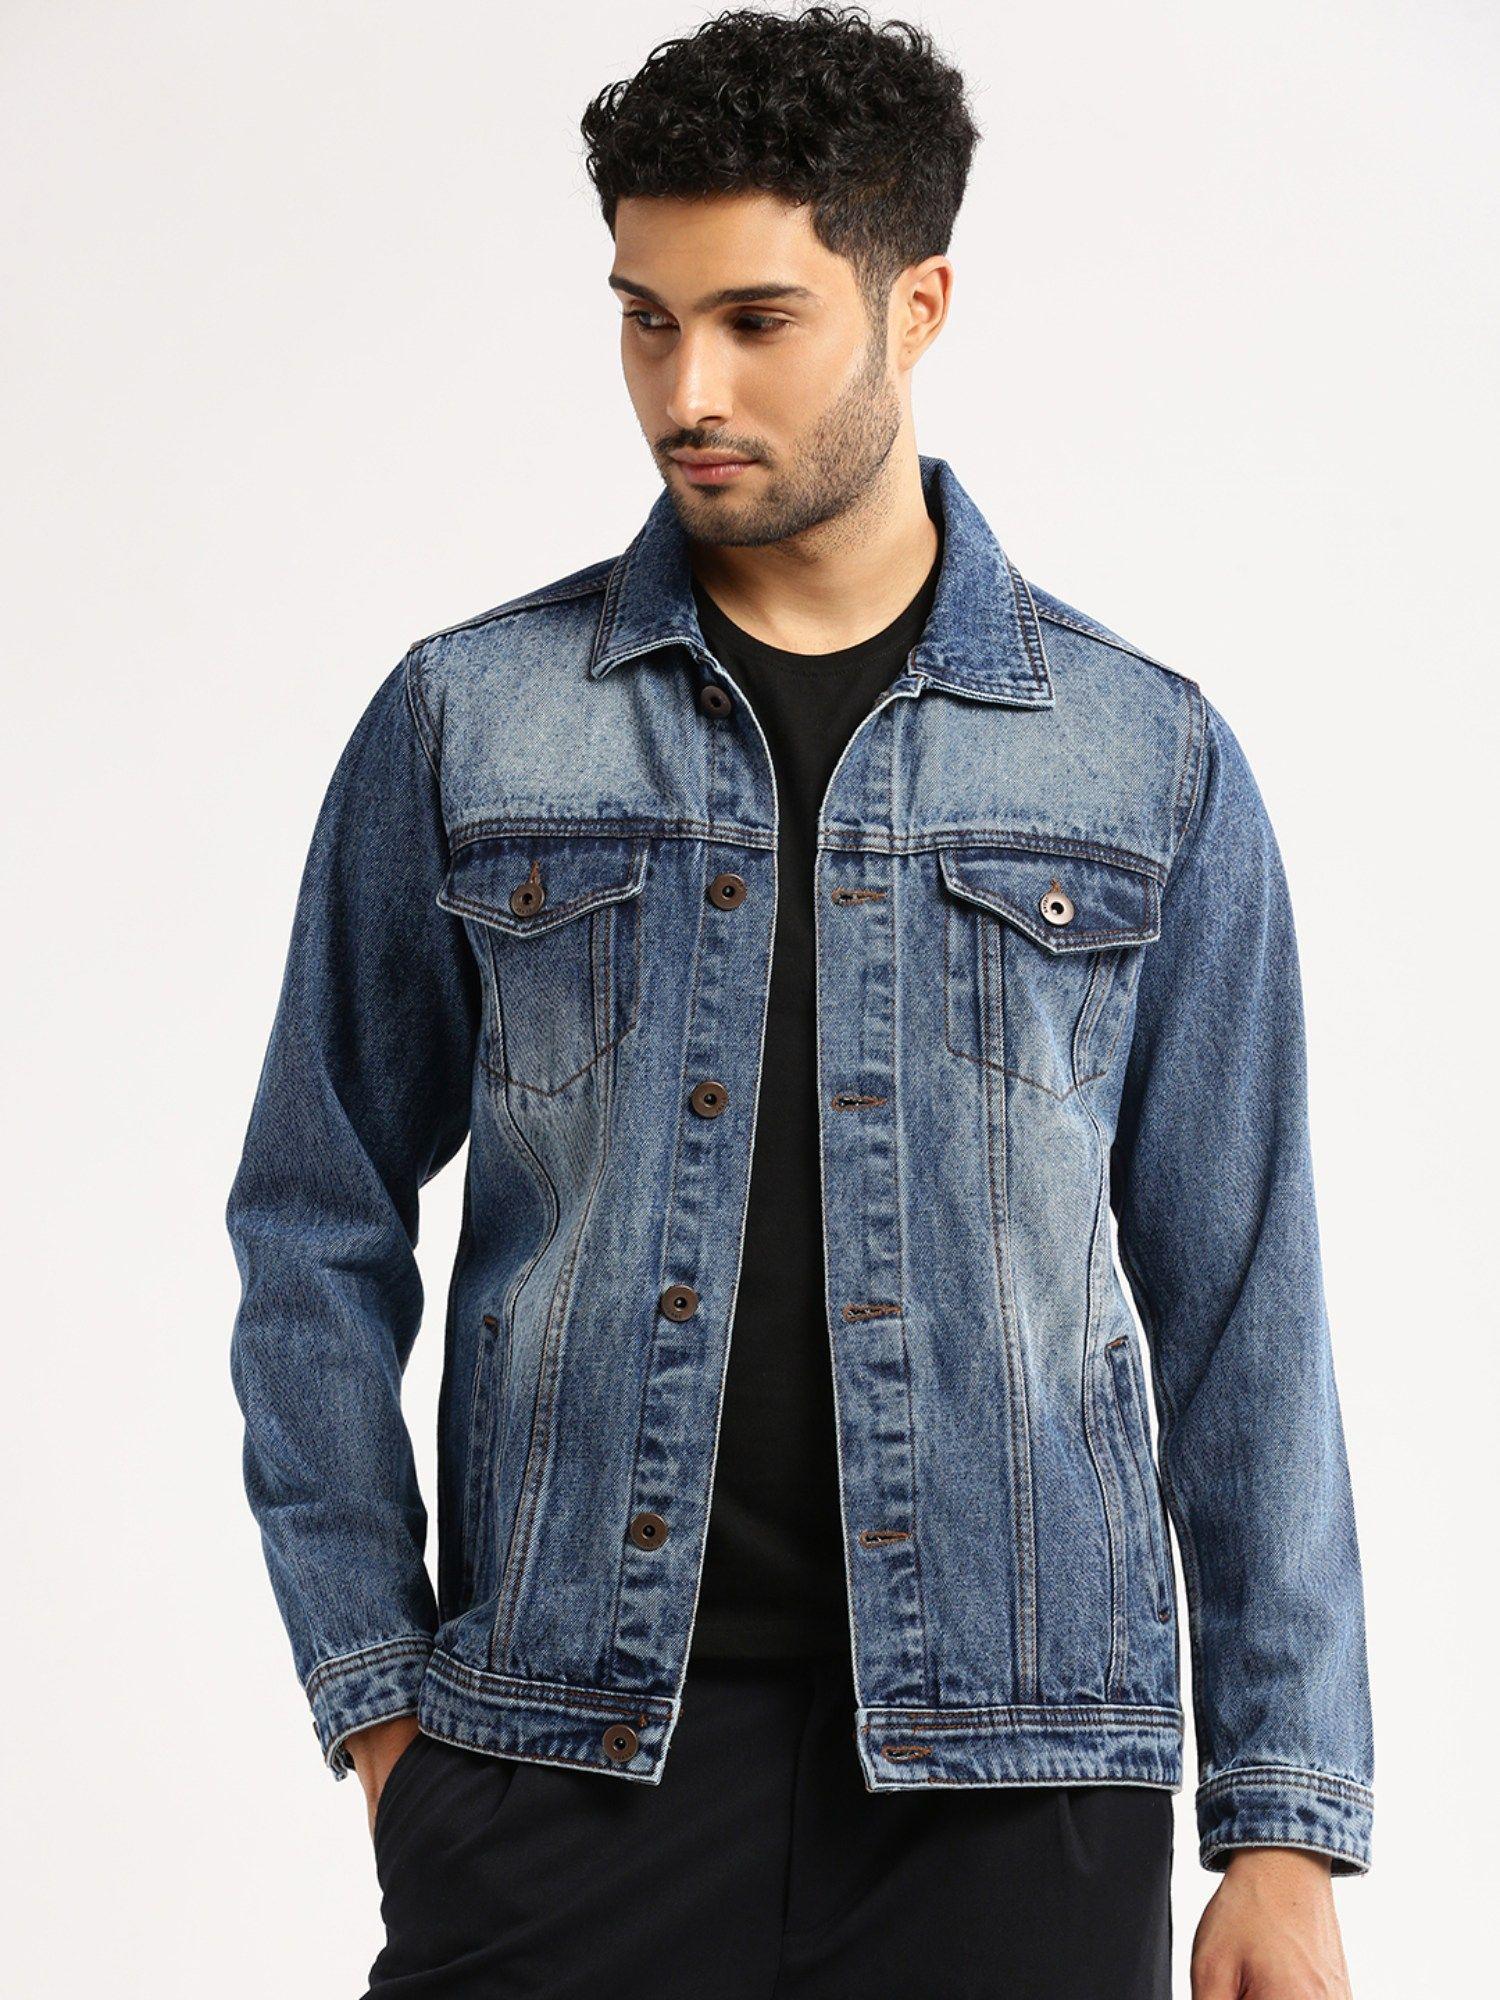 men's-spread-collar-long-sleeves-blue-solid-denim-jacket